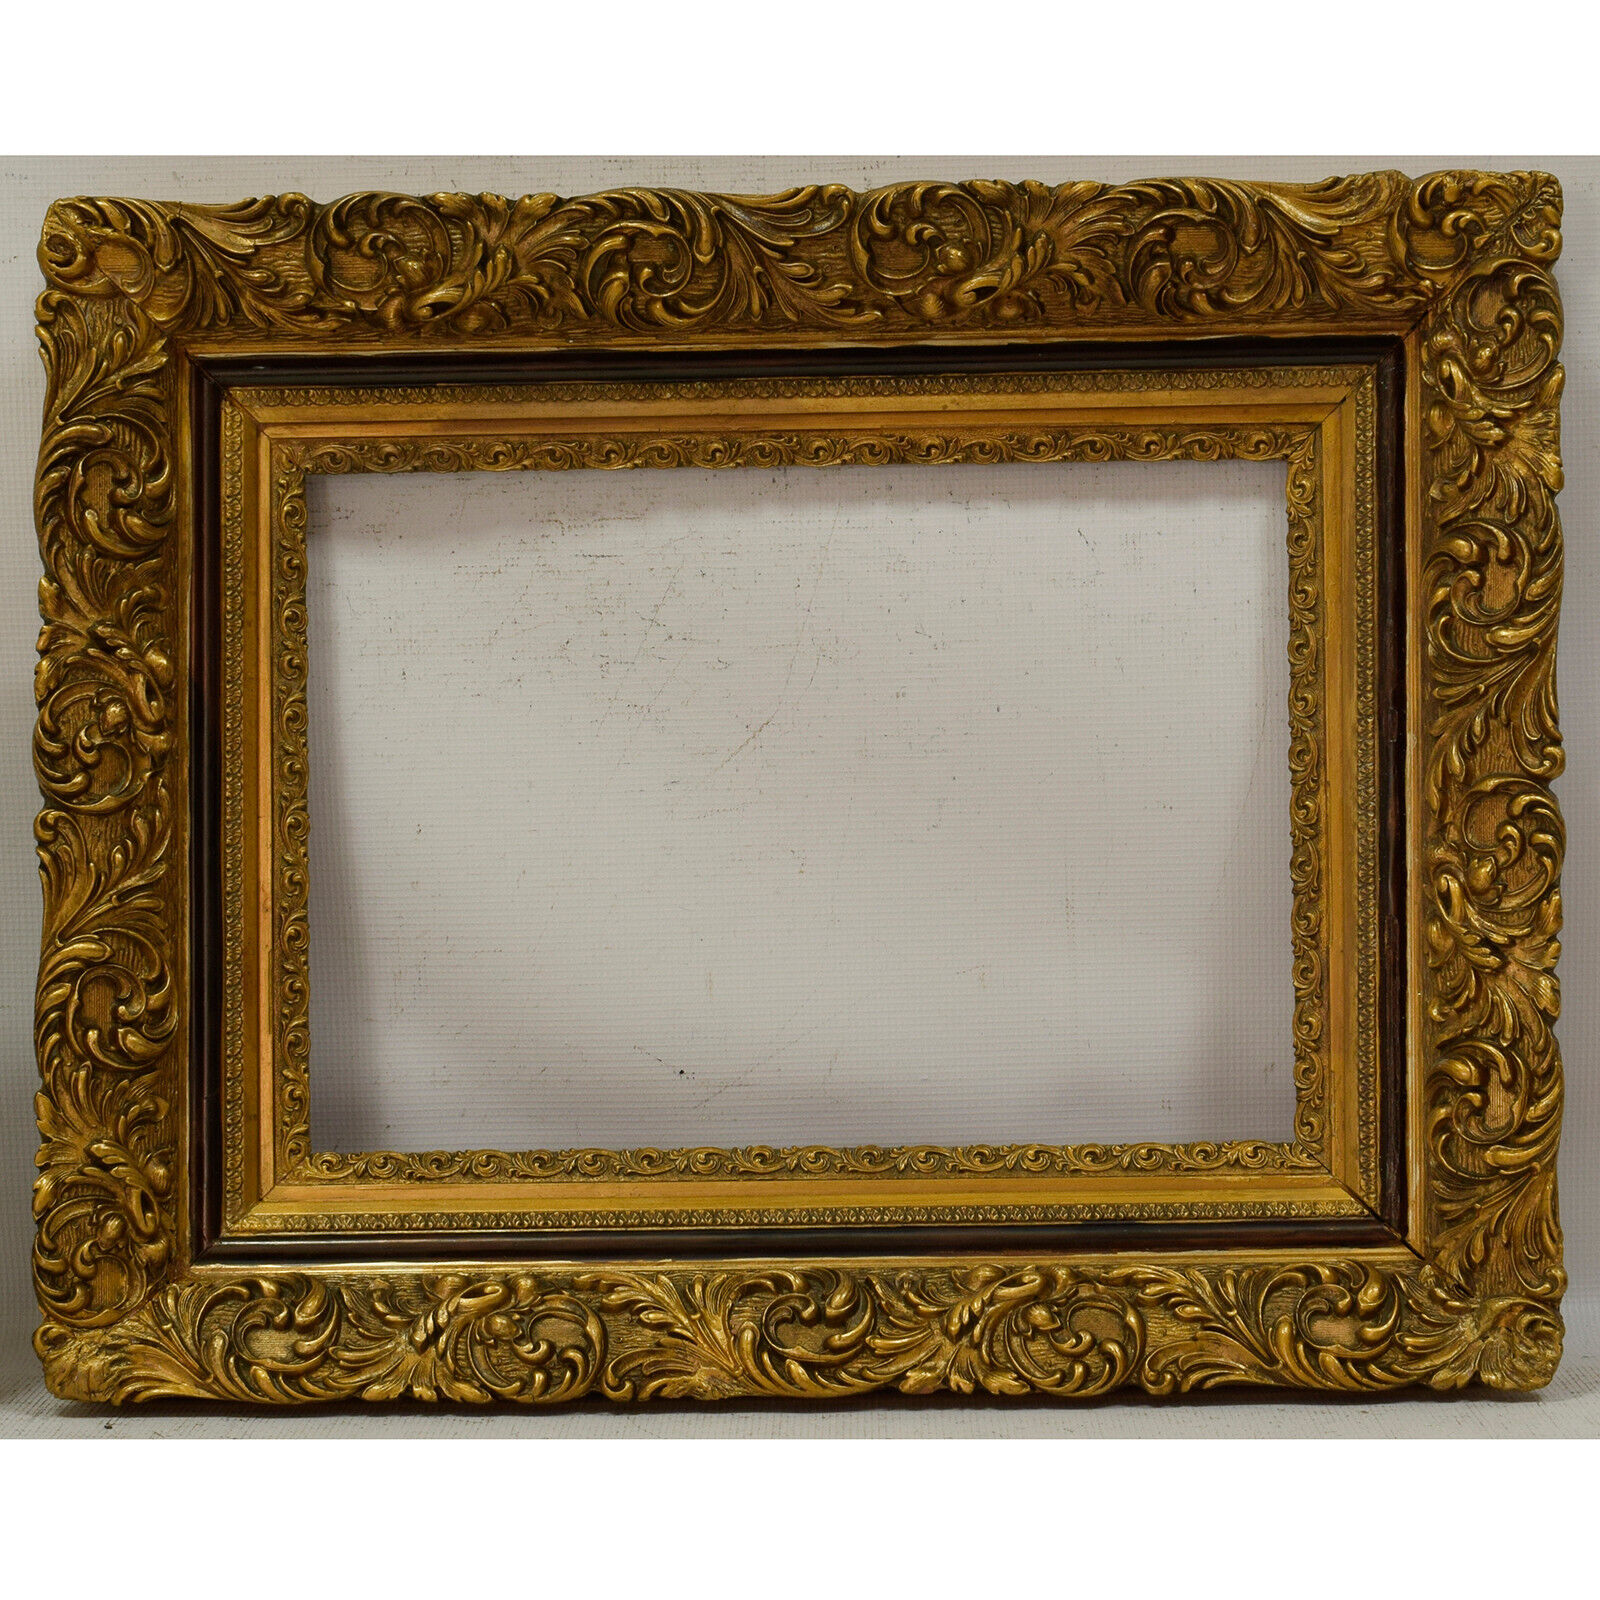 Ca 1920-1940 Old wooden frame decorative Original condition Internal: 16,9x11,8